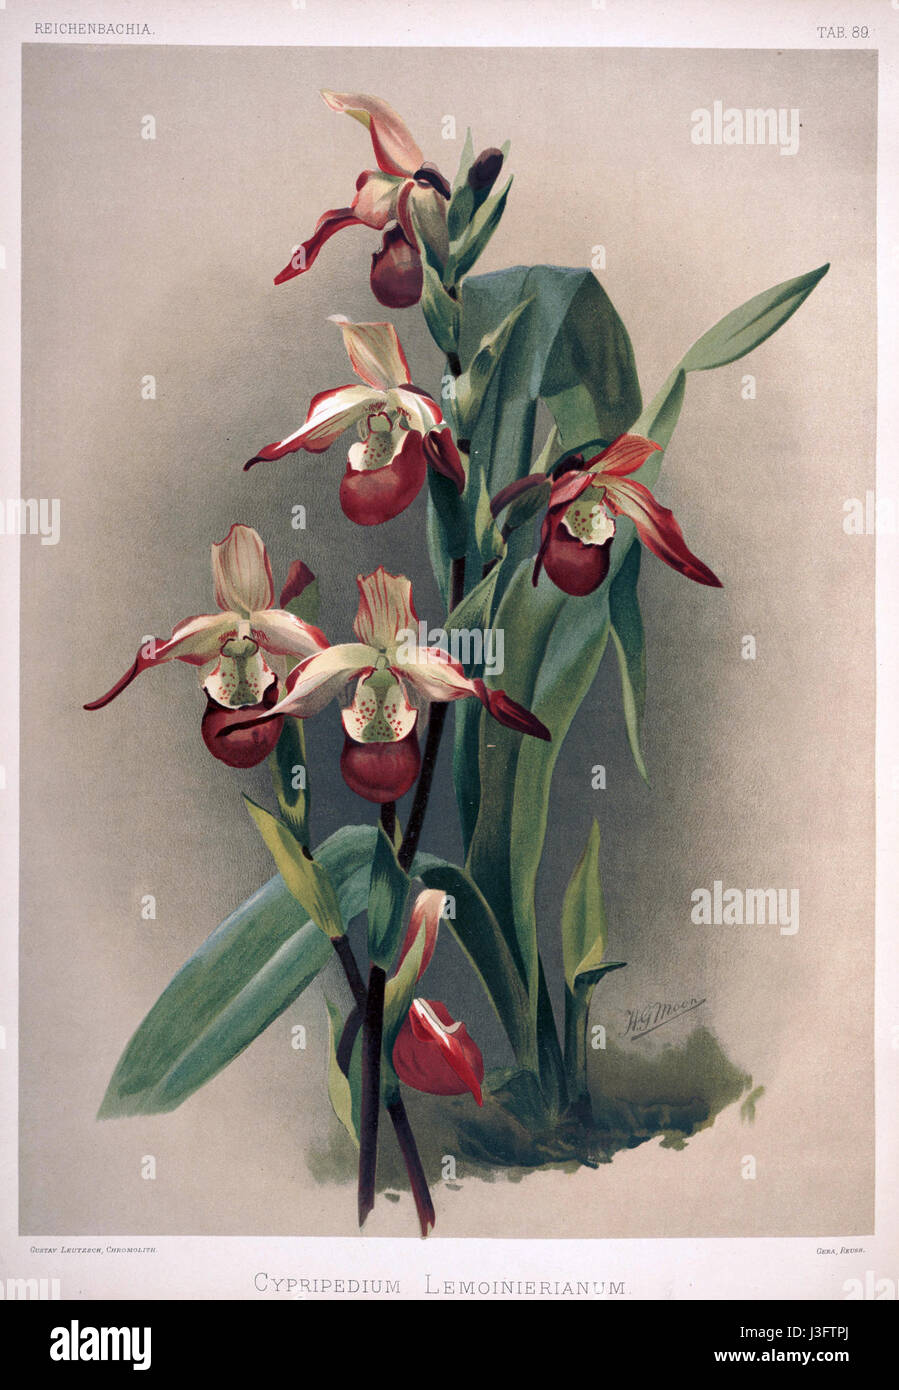 Friedrich Sander Reichenbachia II Platte 89 (1890) Cypripedium Lemoinerianum Stockfoto